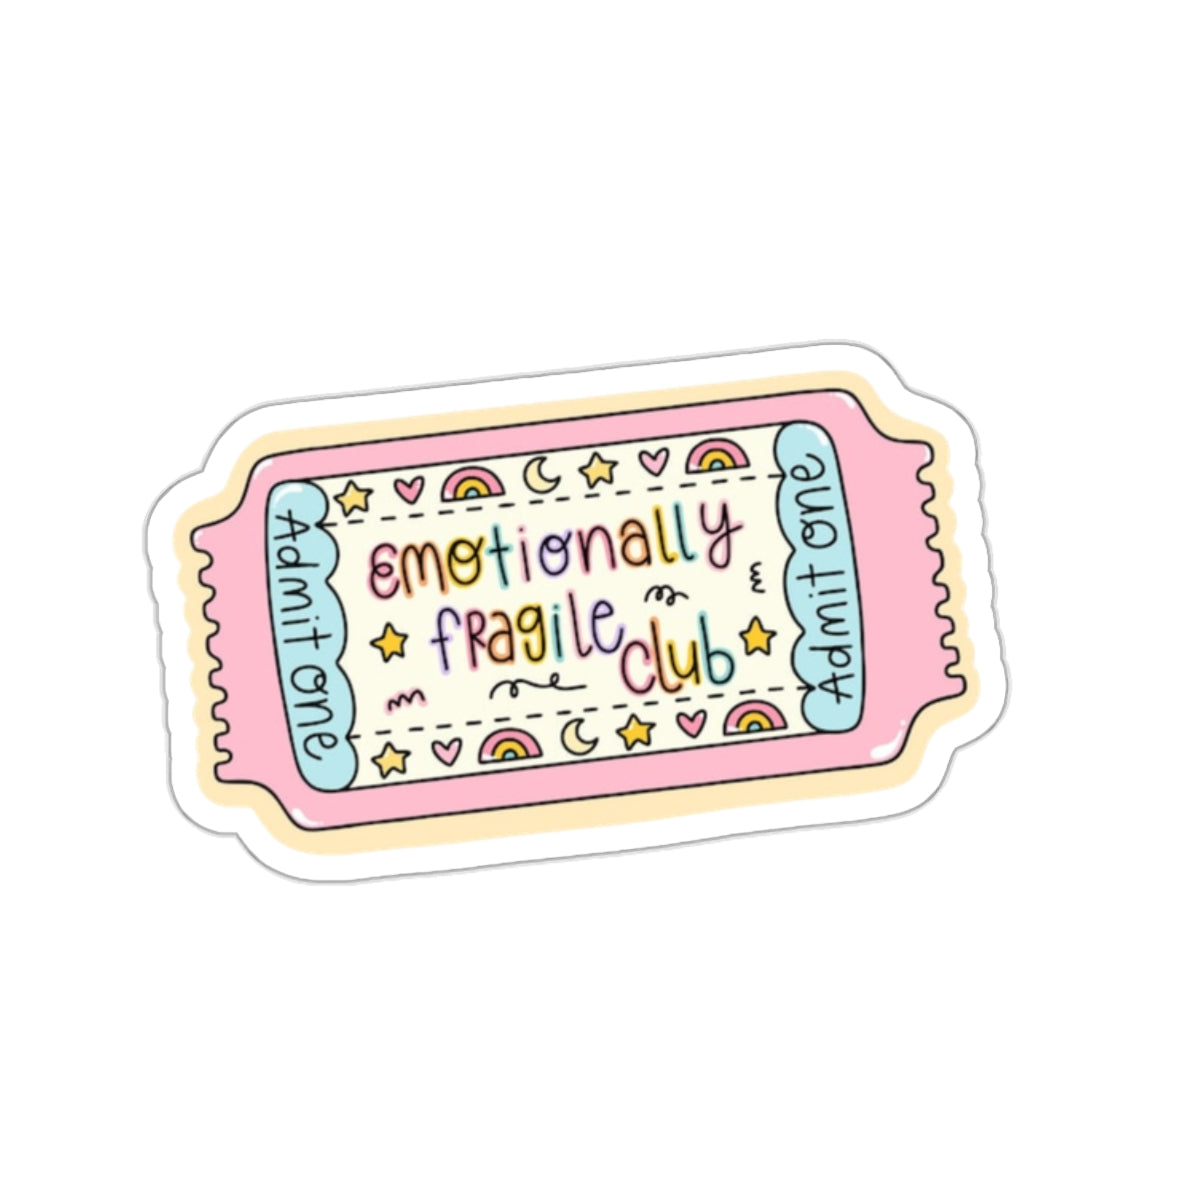 Emotionally fragile Sticker